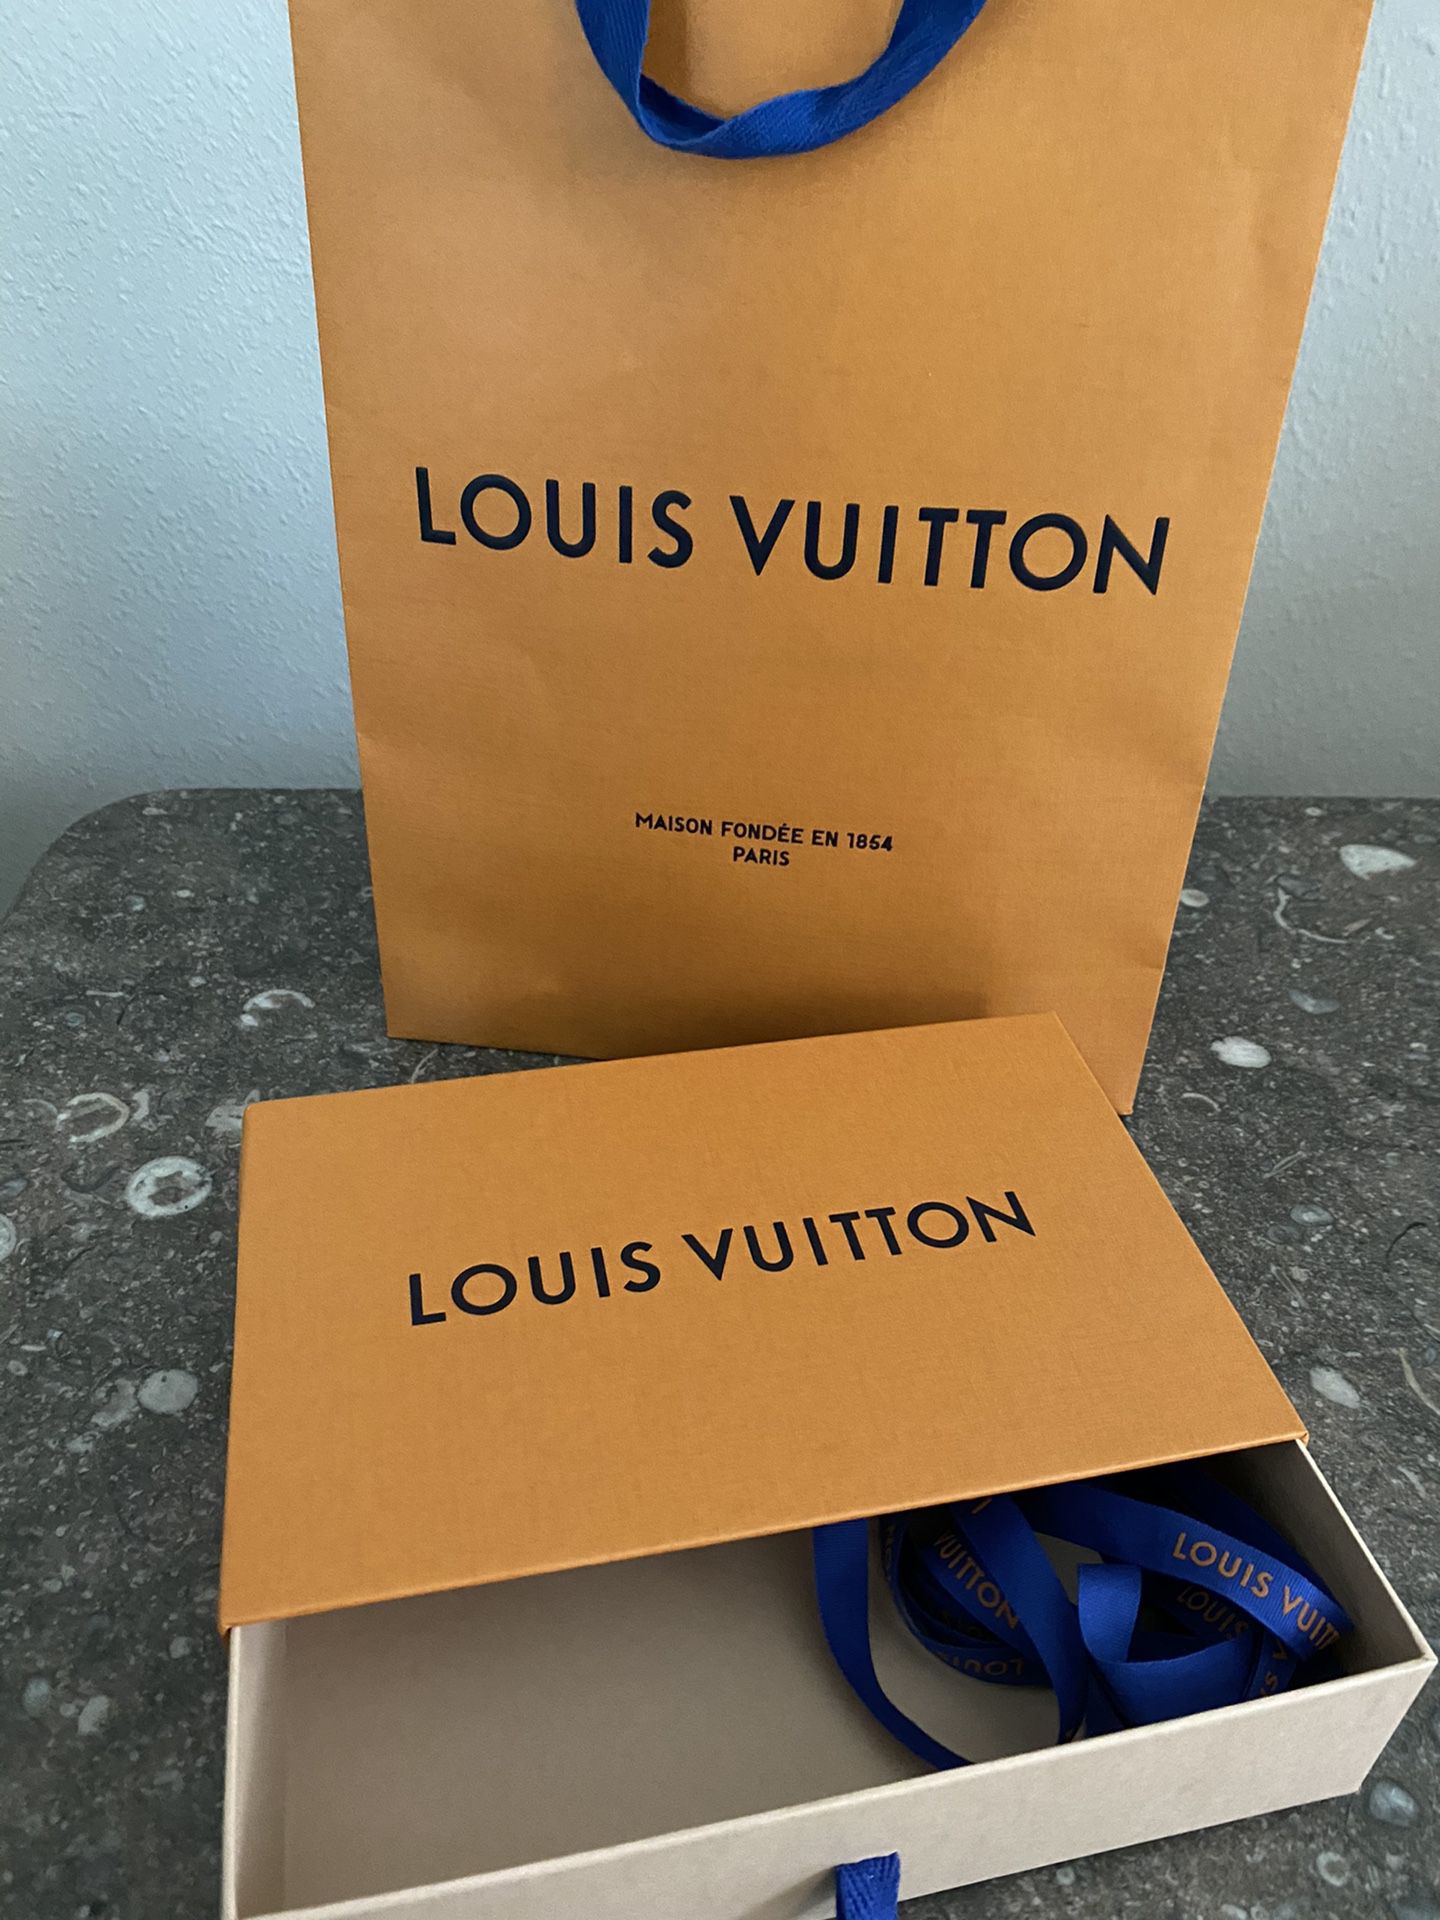 Authentic Louis Vuitton LV Box and Bag